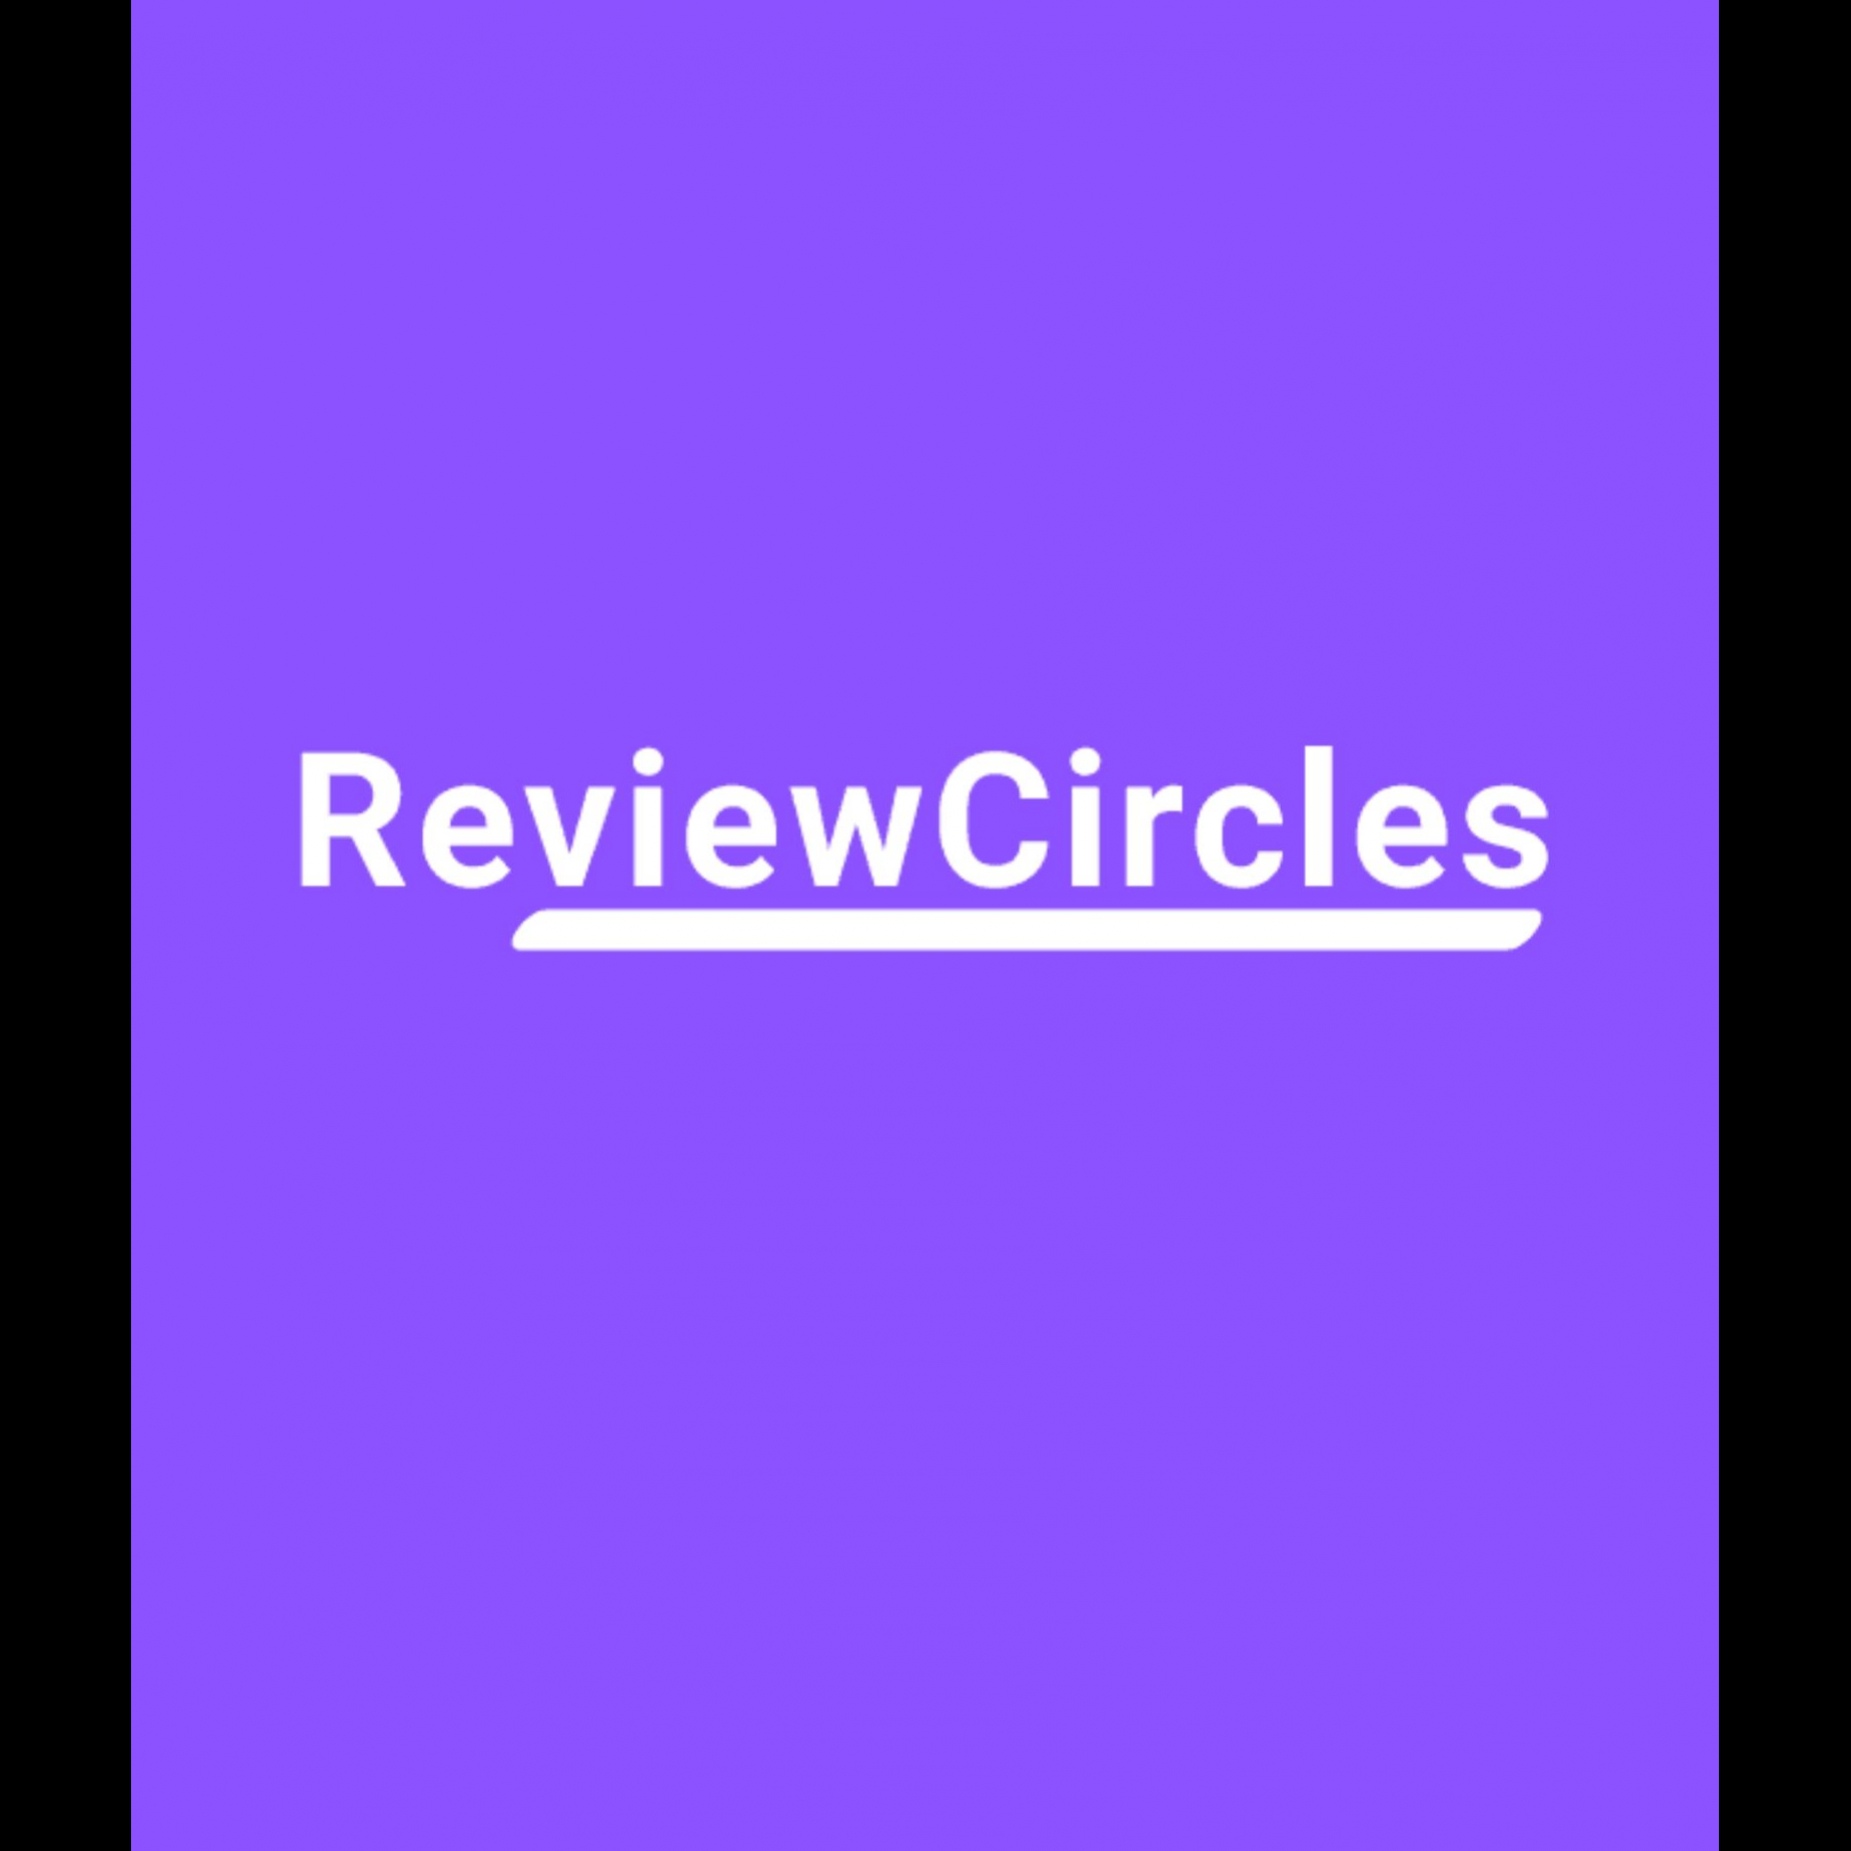 ReviewCircles